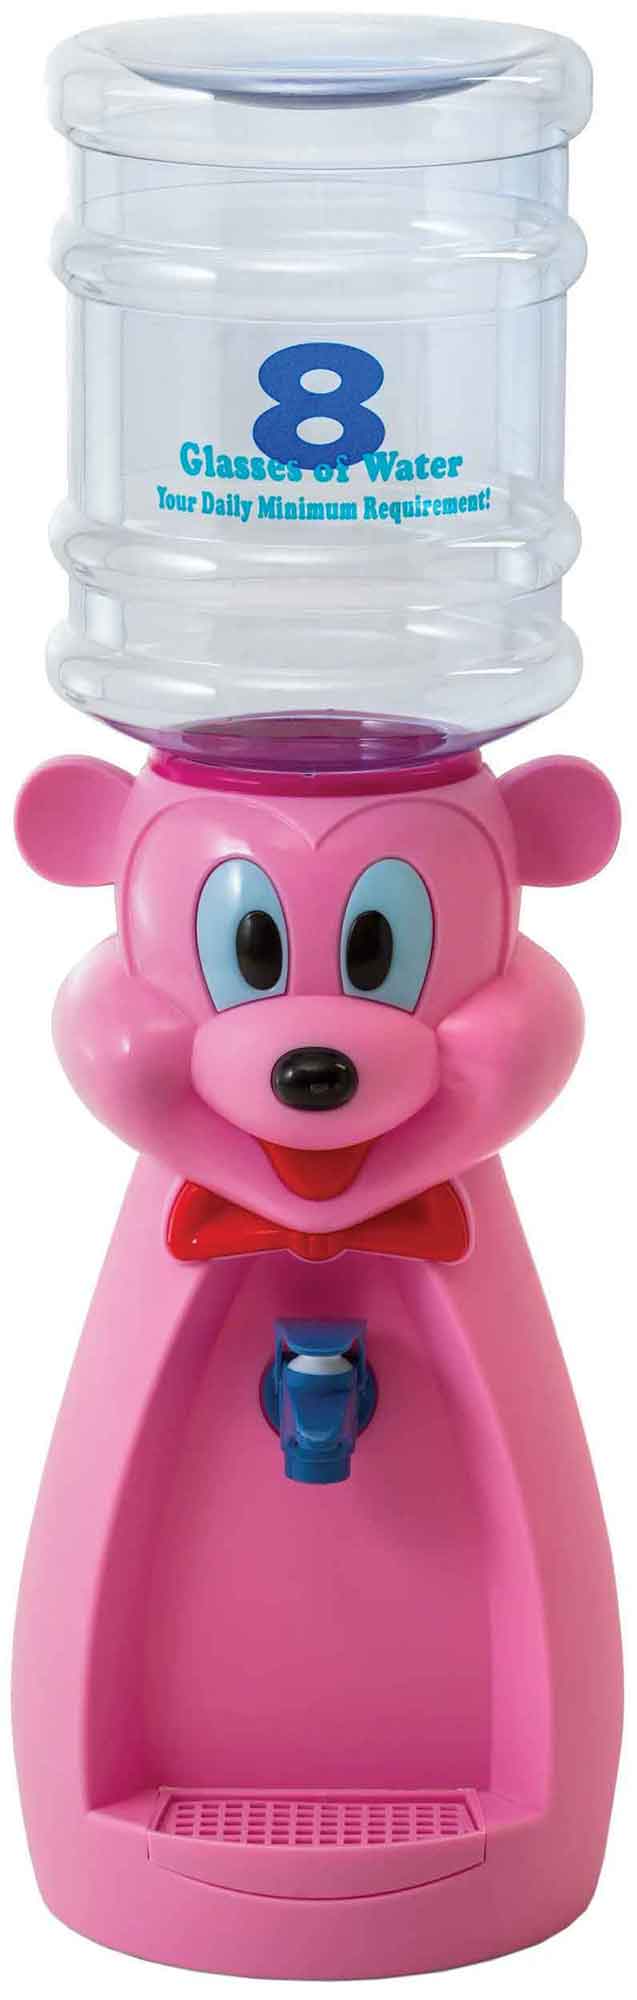 Кулер для воды Vatten Kids Mouse Pink 4727 - фото 1